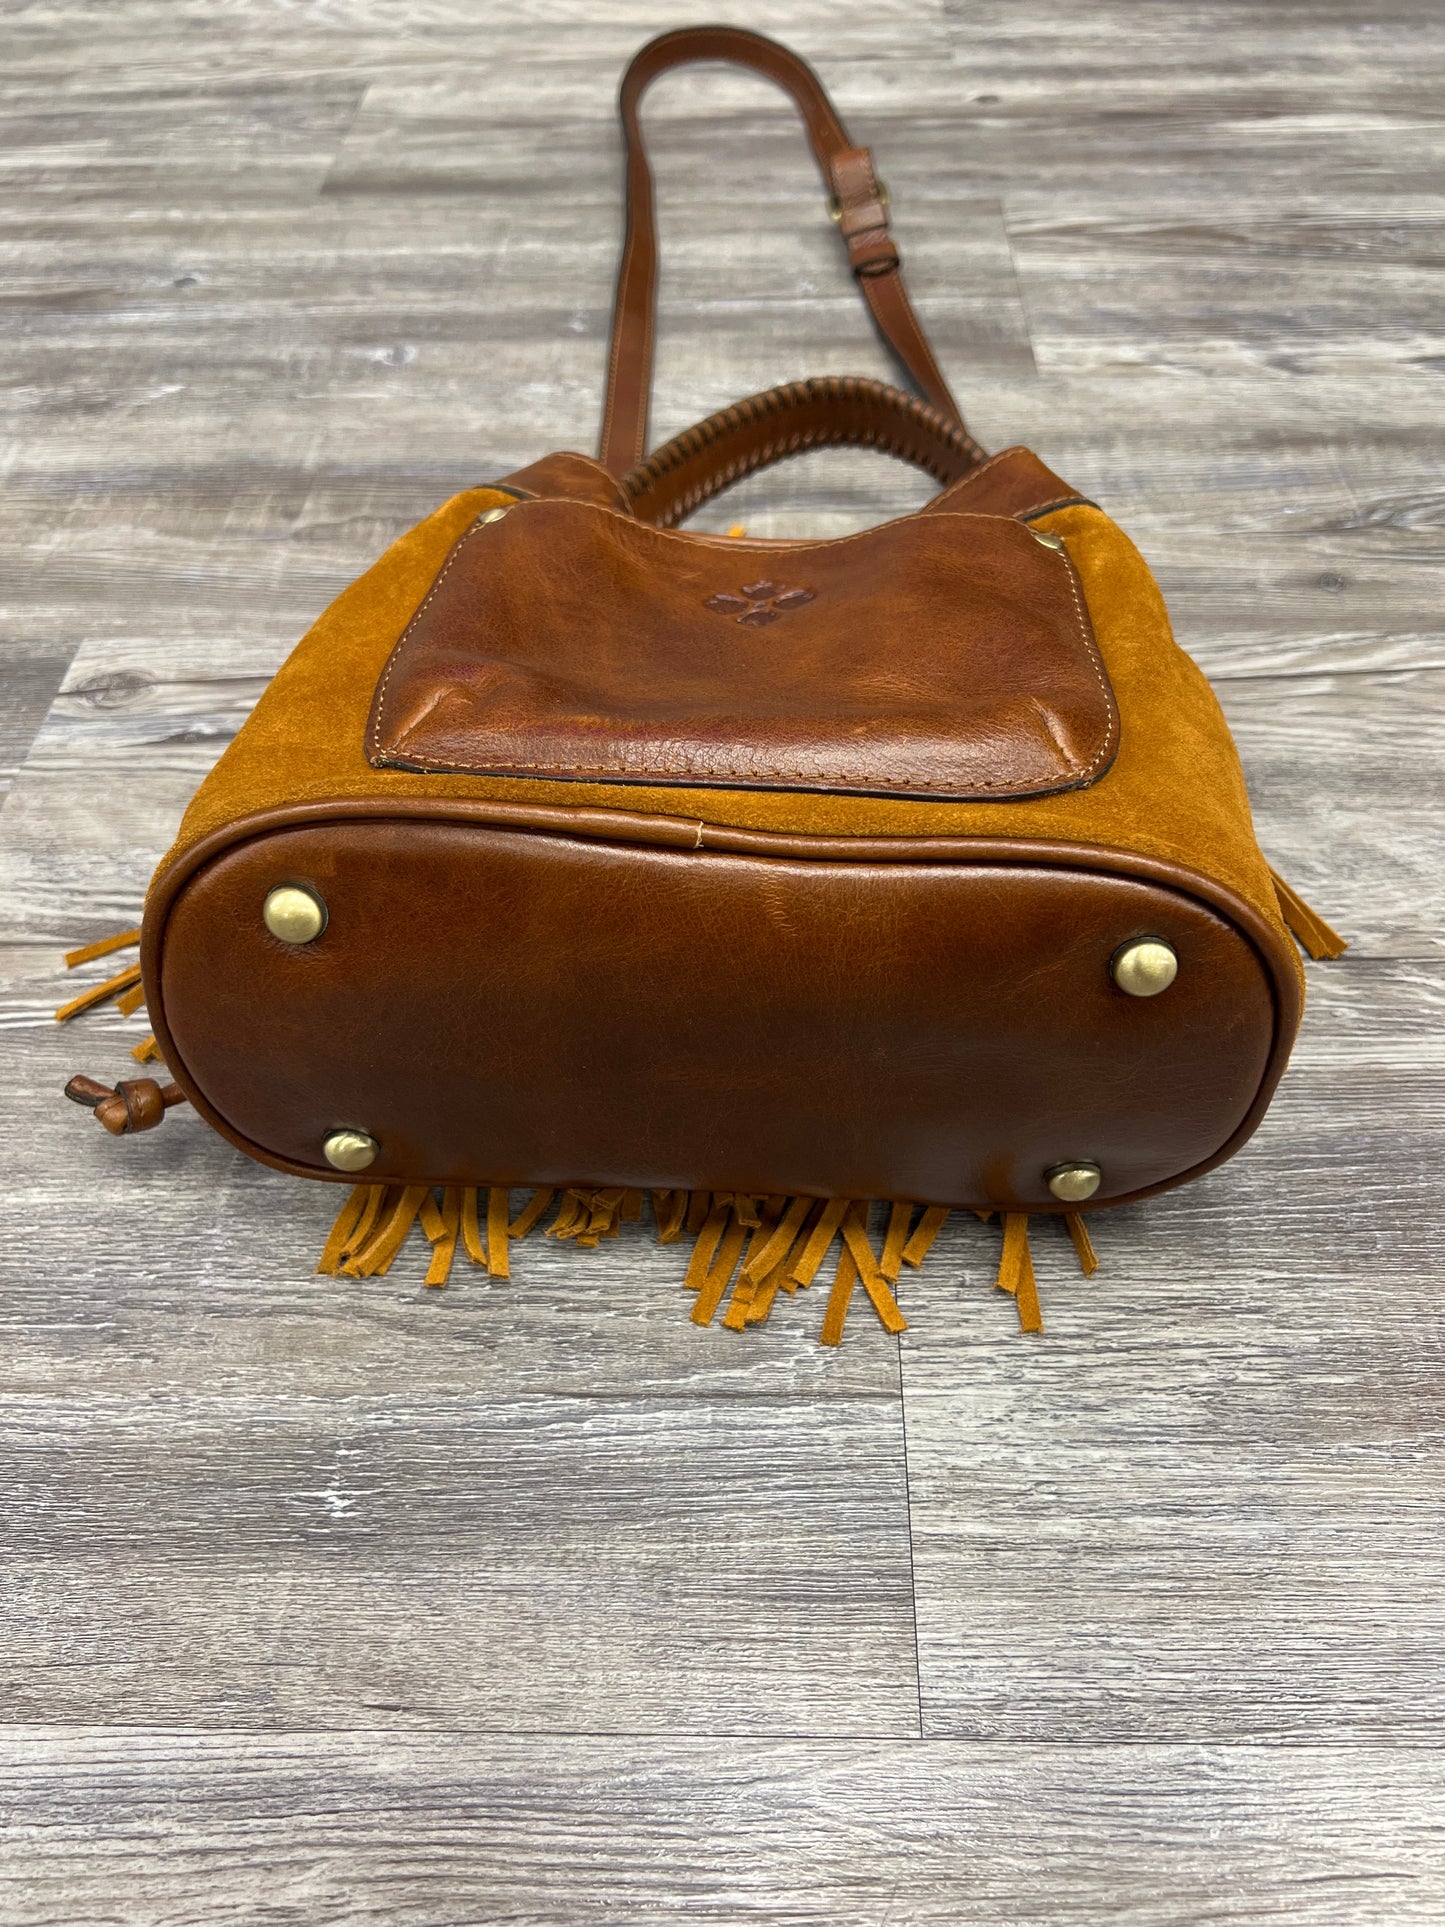 Handbag Designer By Patricia Nash Size: Medium